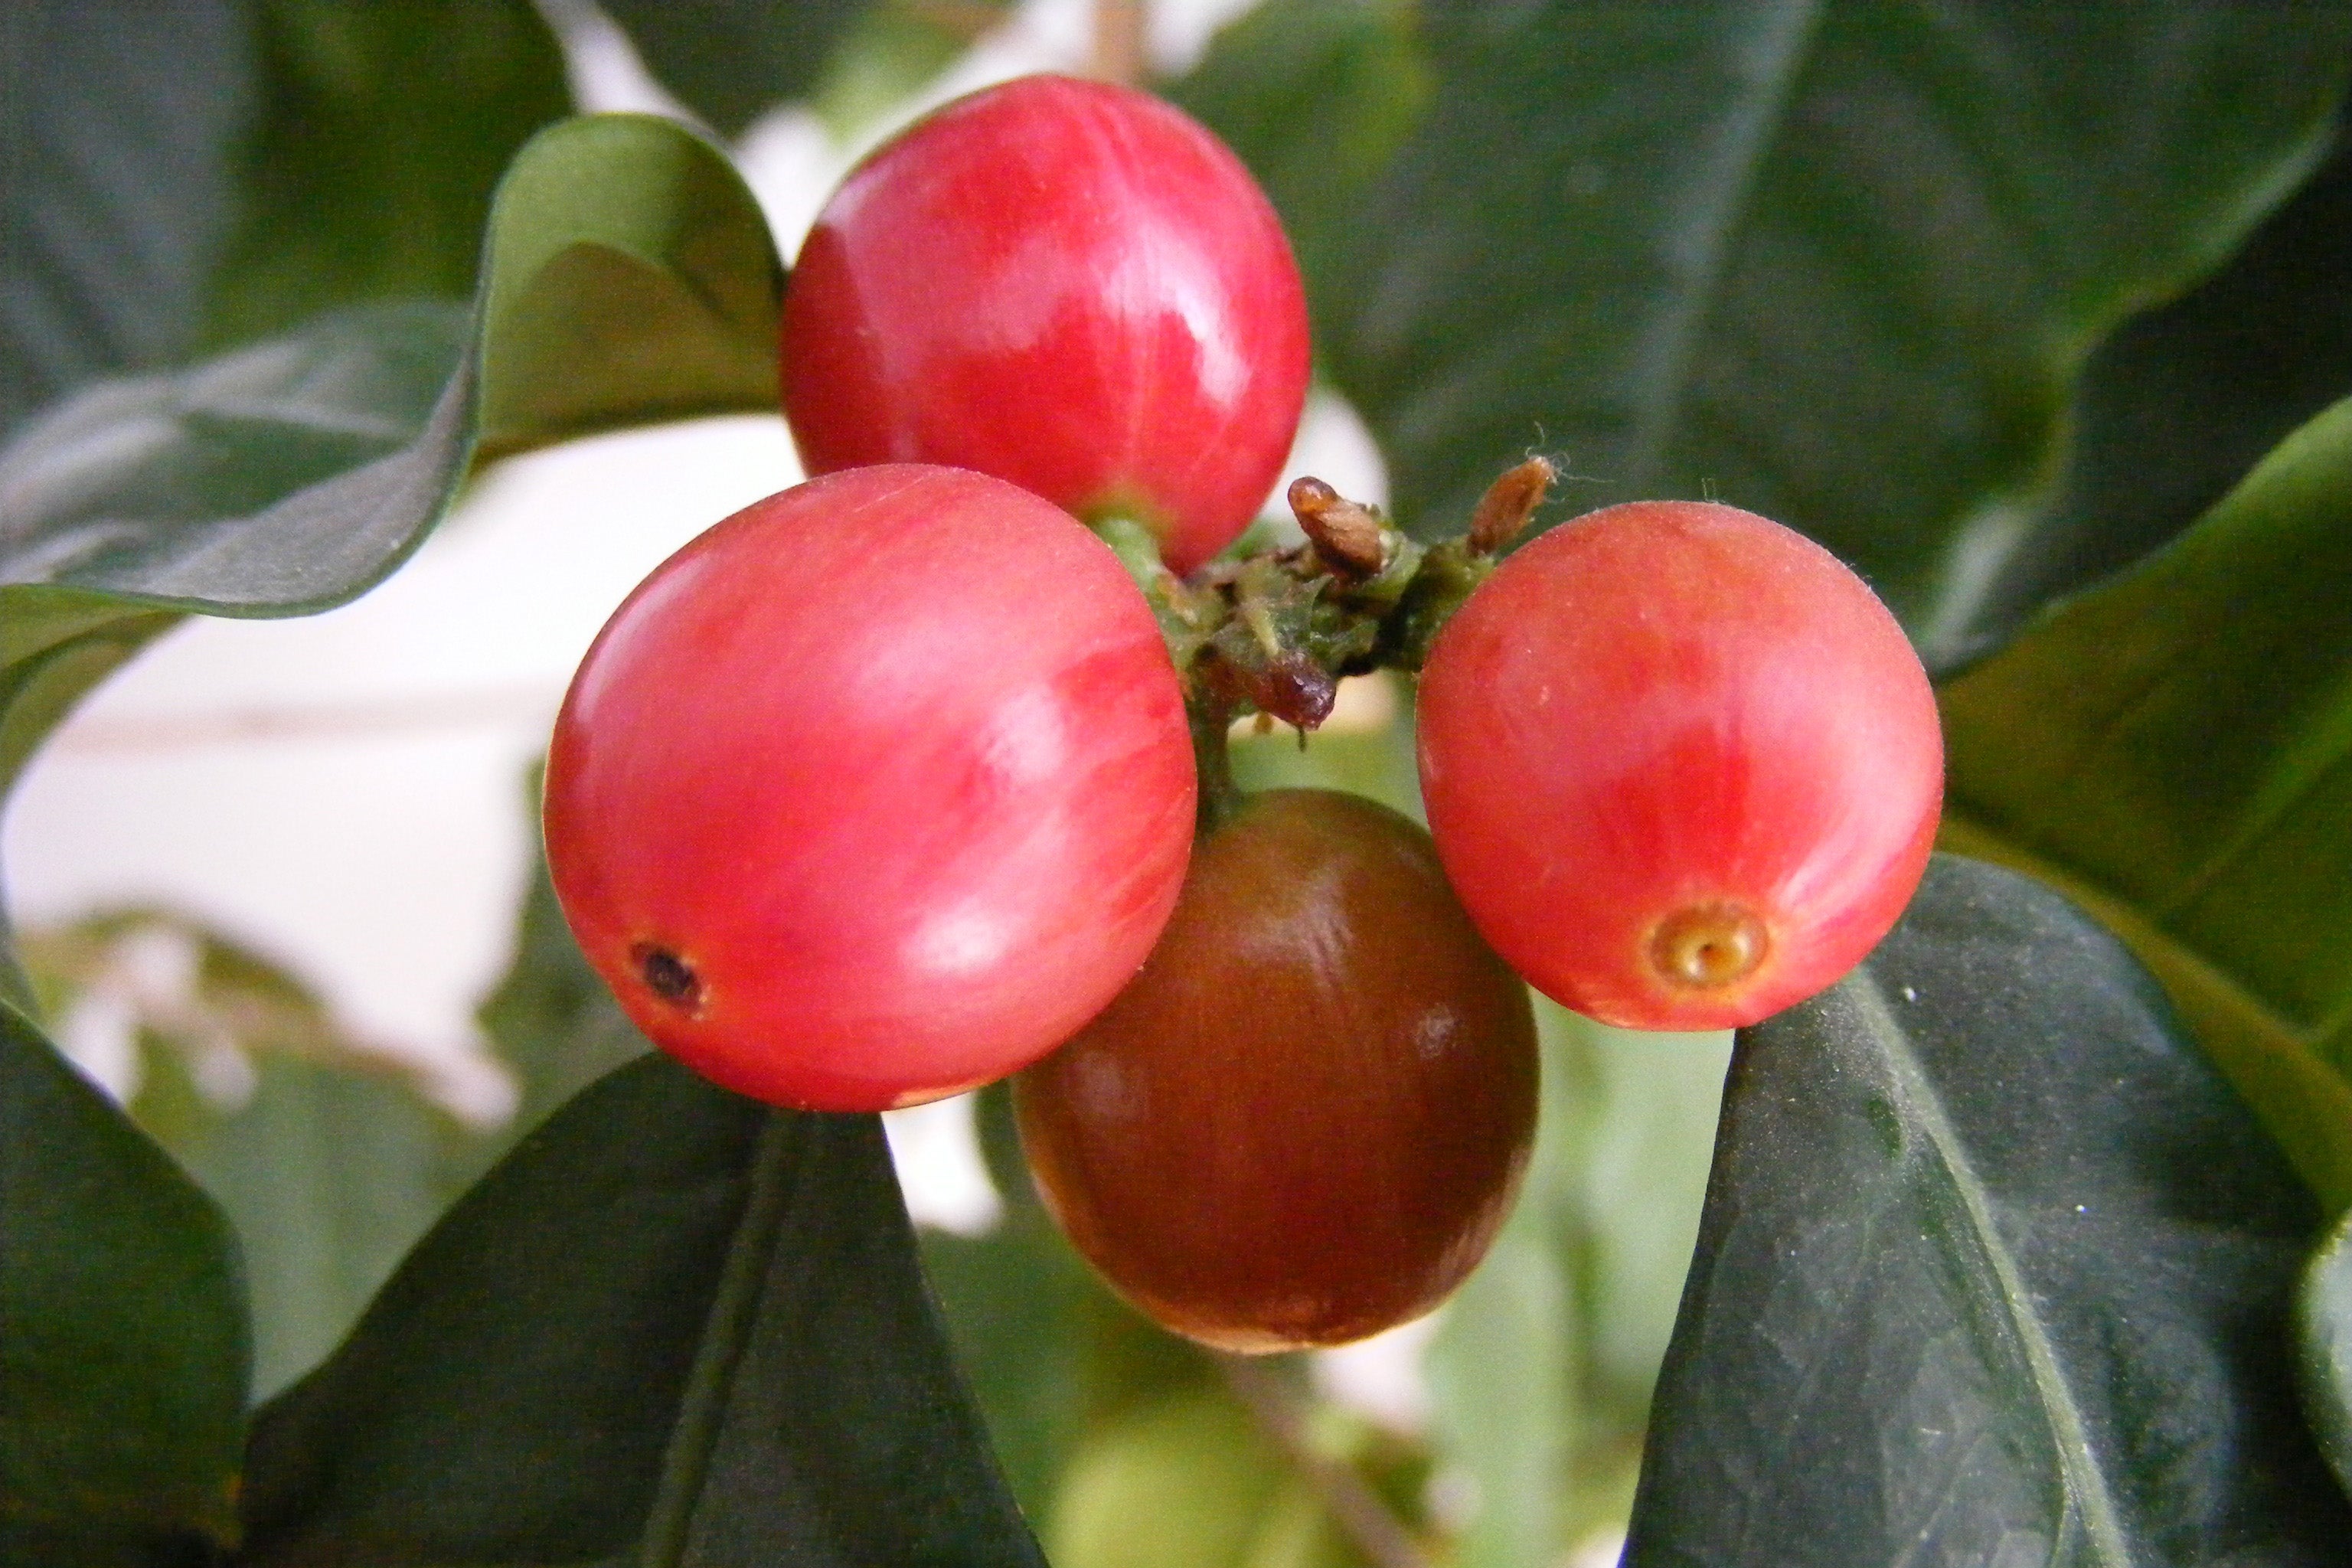 Coffee cherry